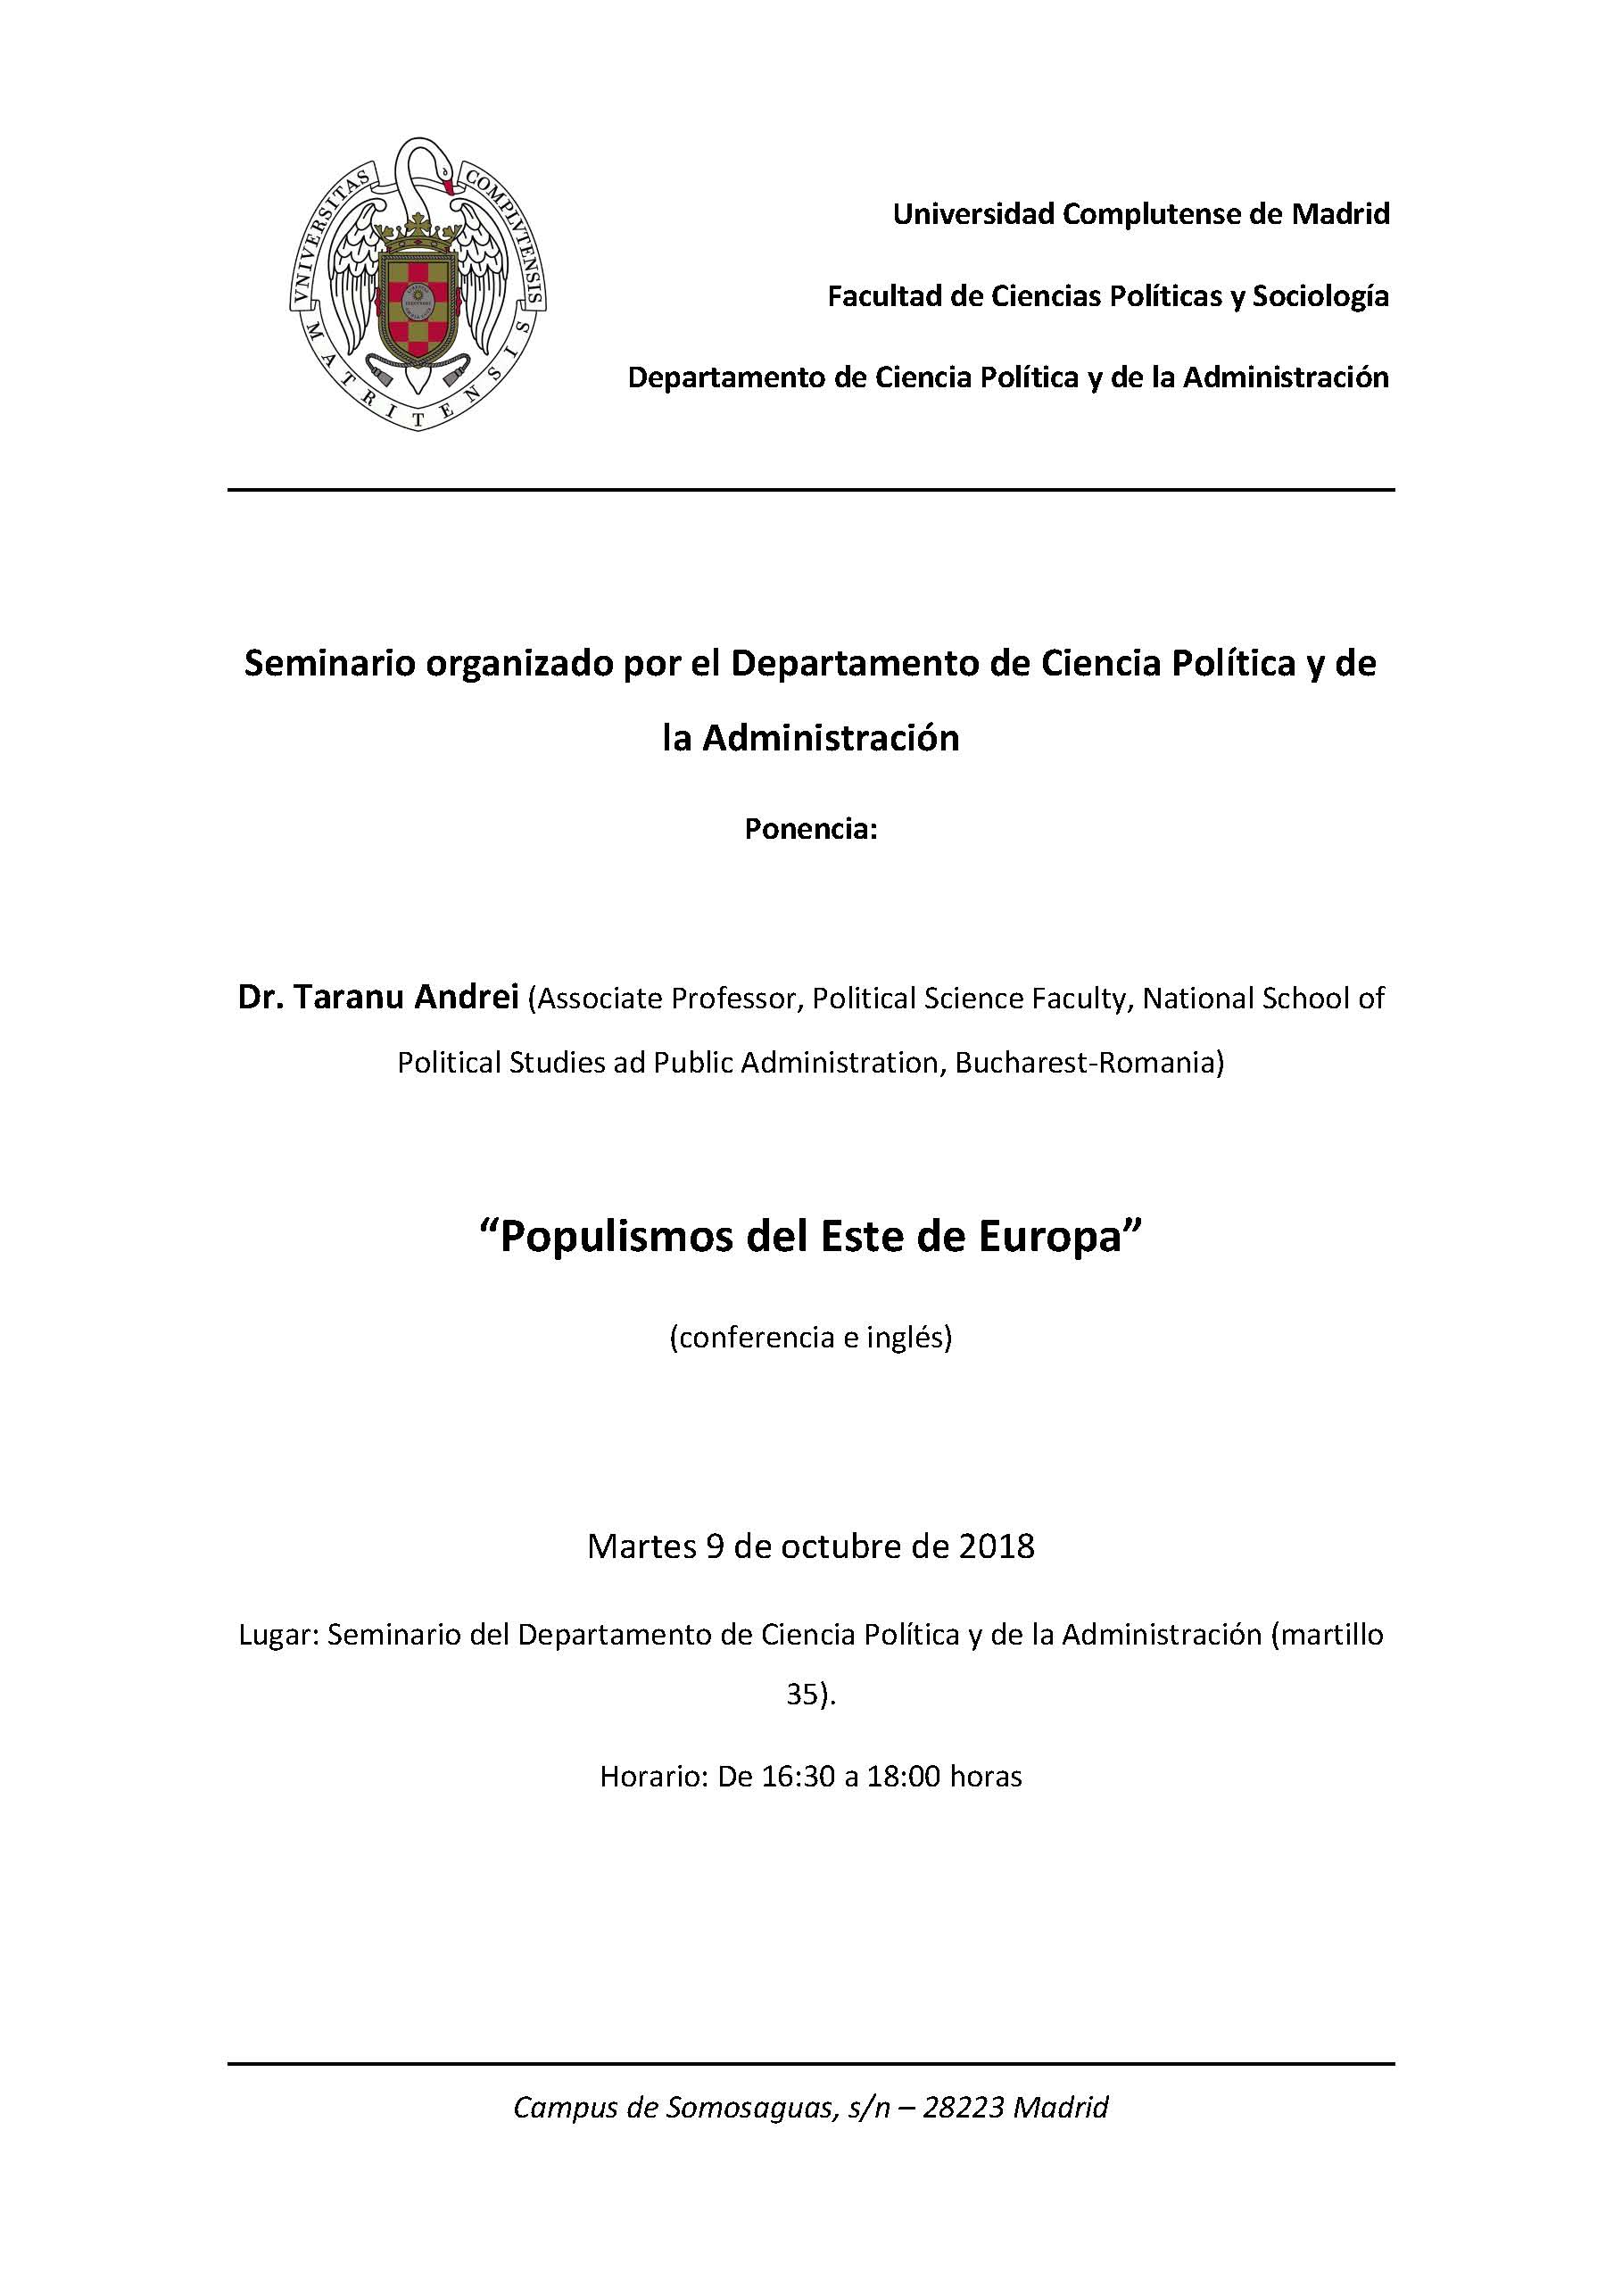 Conferencia:  “Populismos del Este de Europa”, a cargo del Dr. Taranu Andrei (National School of Political Studies ad Public Administration, Bucharest-Romania) 9 octubre